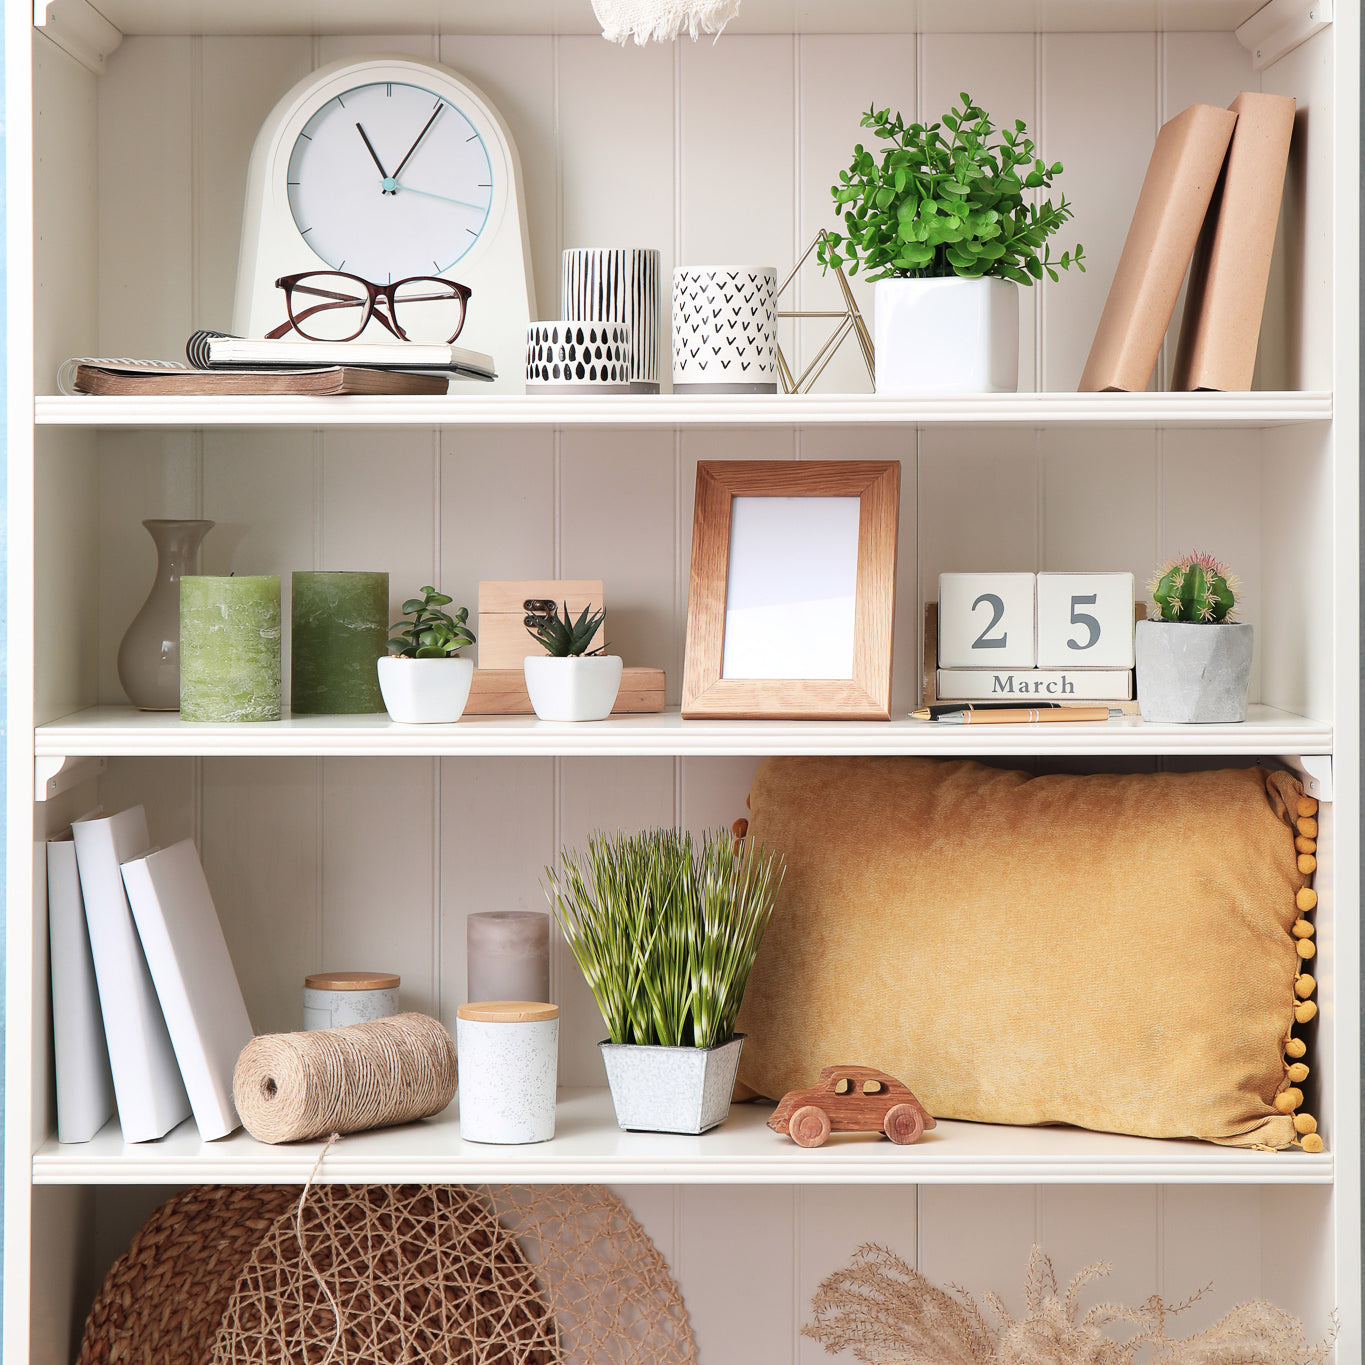 How To Style Your Shelf | Shelf Inspo